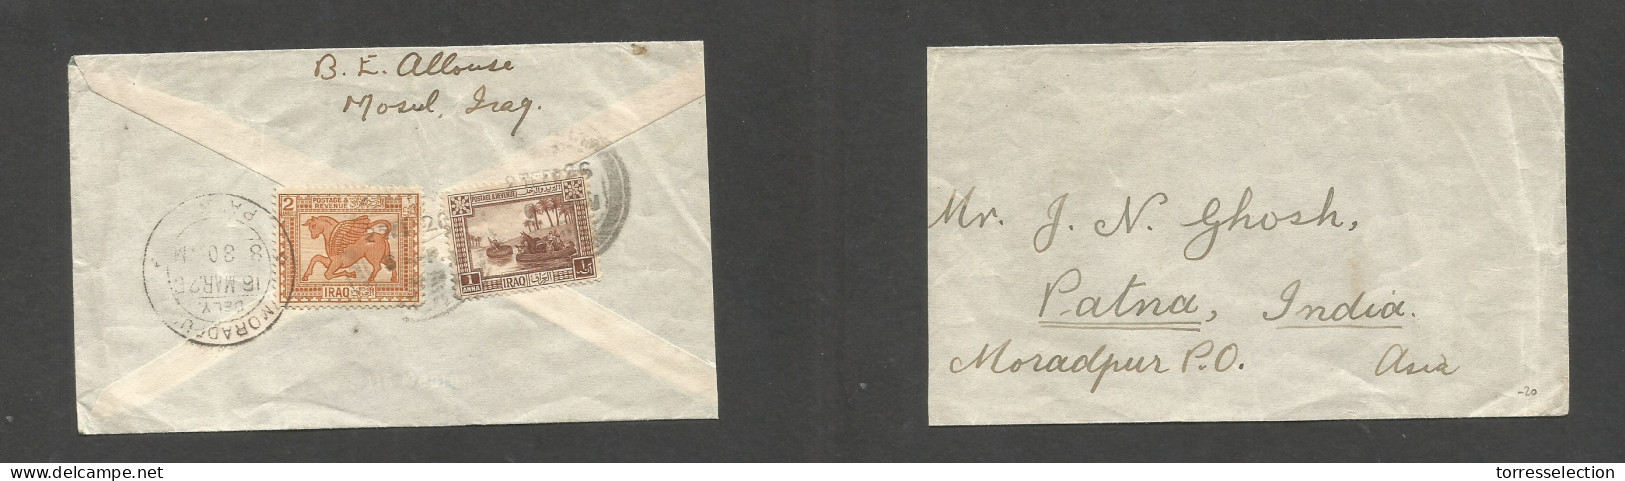 IRAQ. 1926 (16 March) Moradeul, Mosul - India, Patna. Reverse Multifkd Envelope At 3a Rate. - Iraq